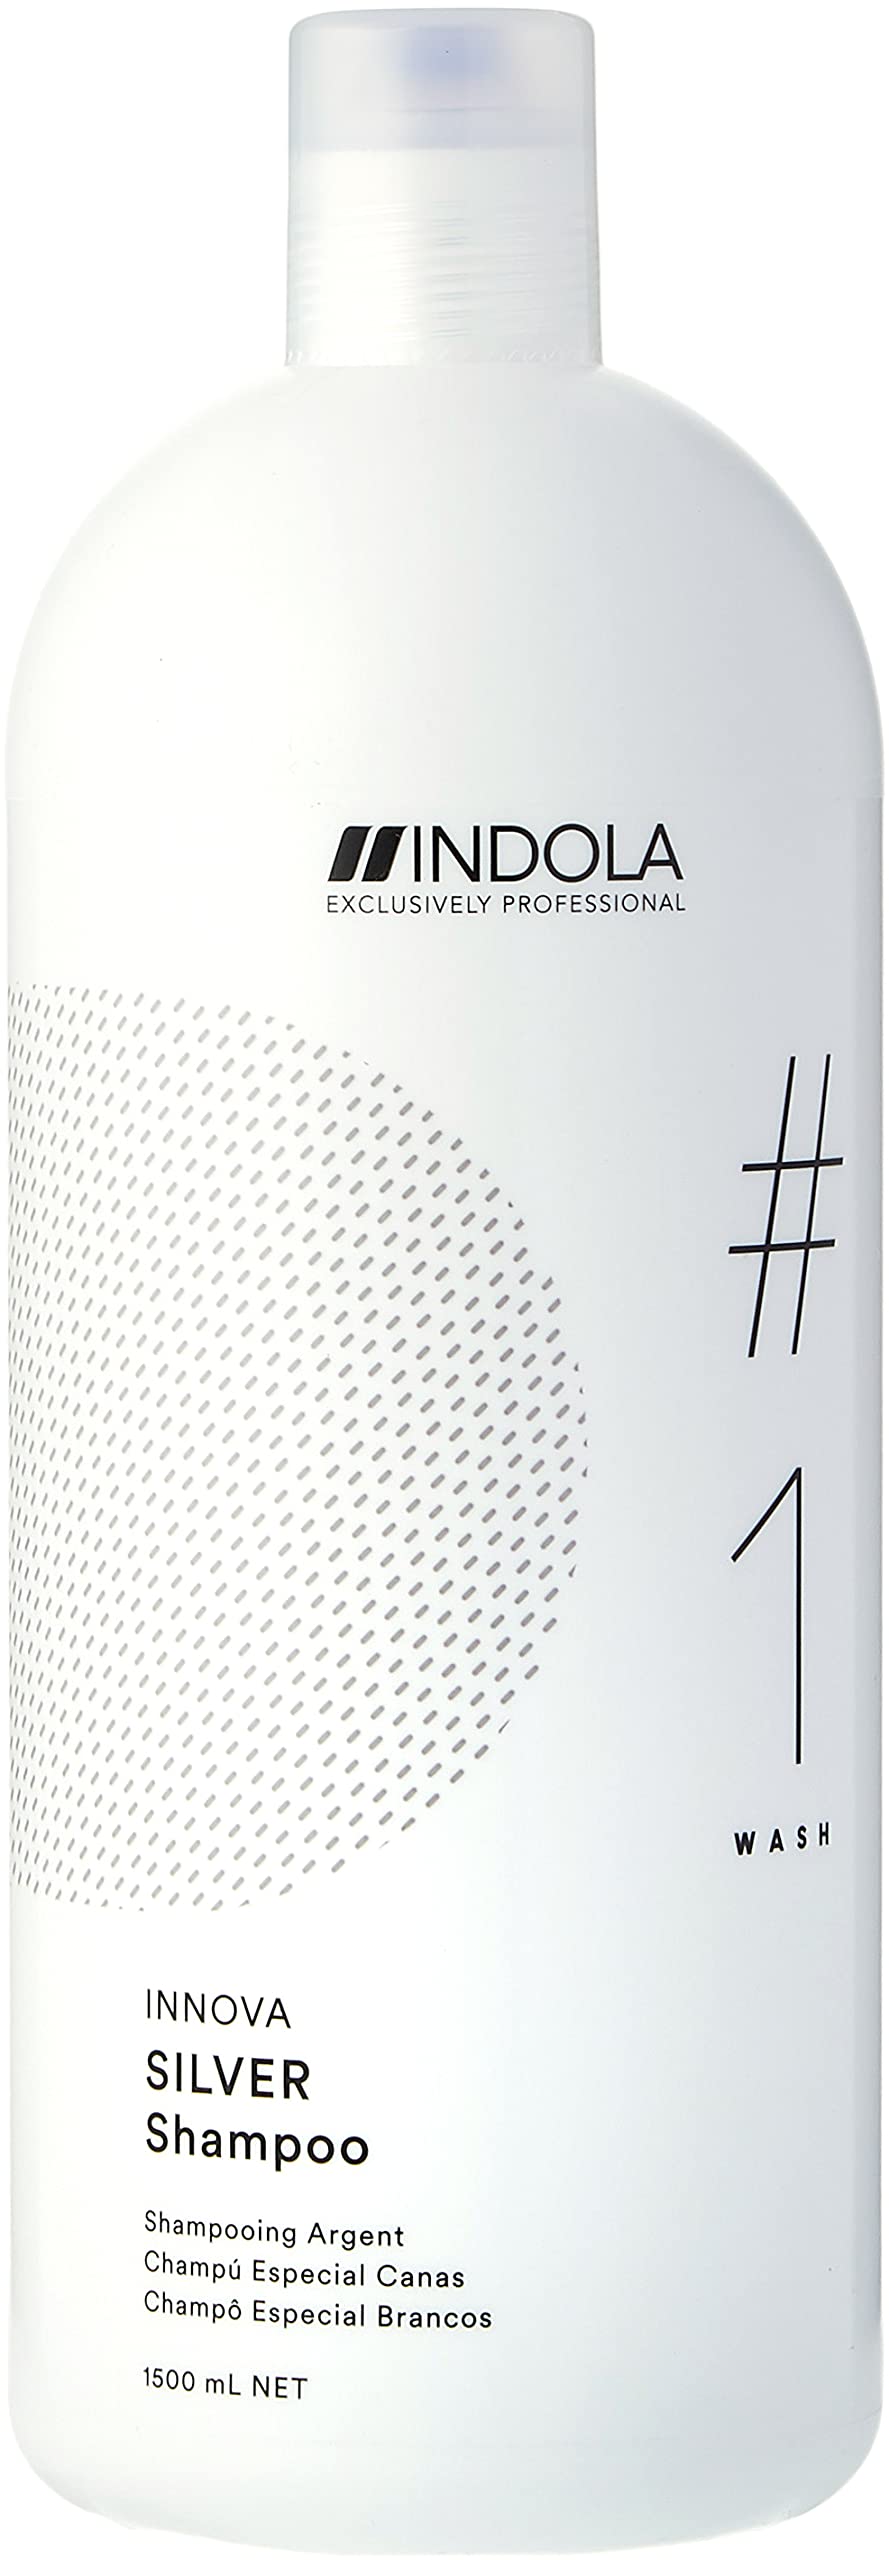 Indola Innova Style Finish Haarspray Hold 4, 1.5 l